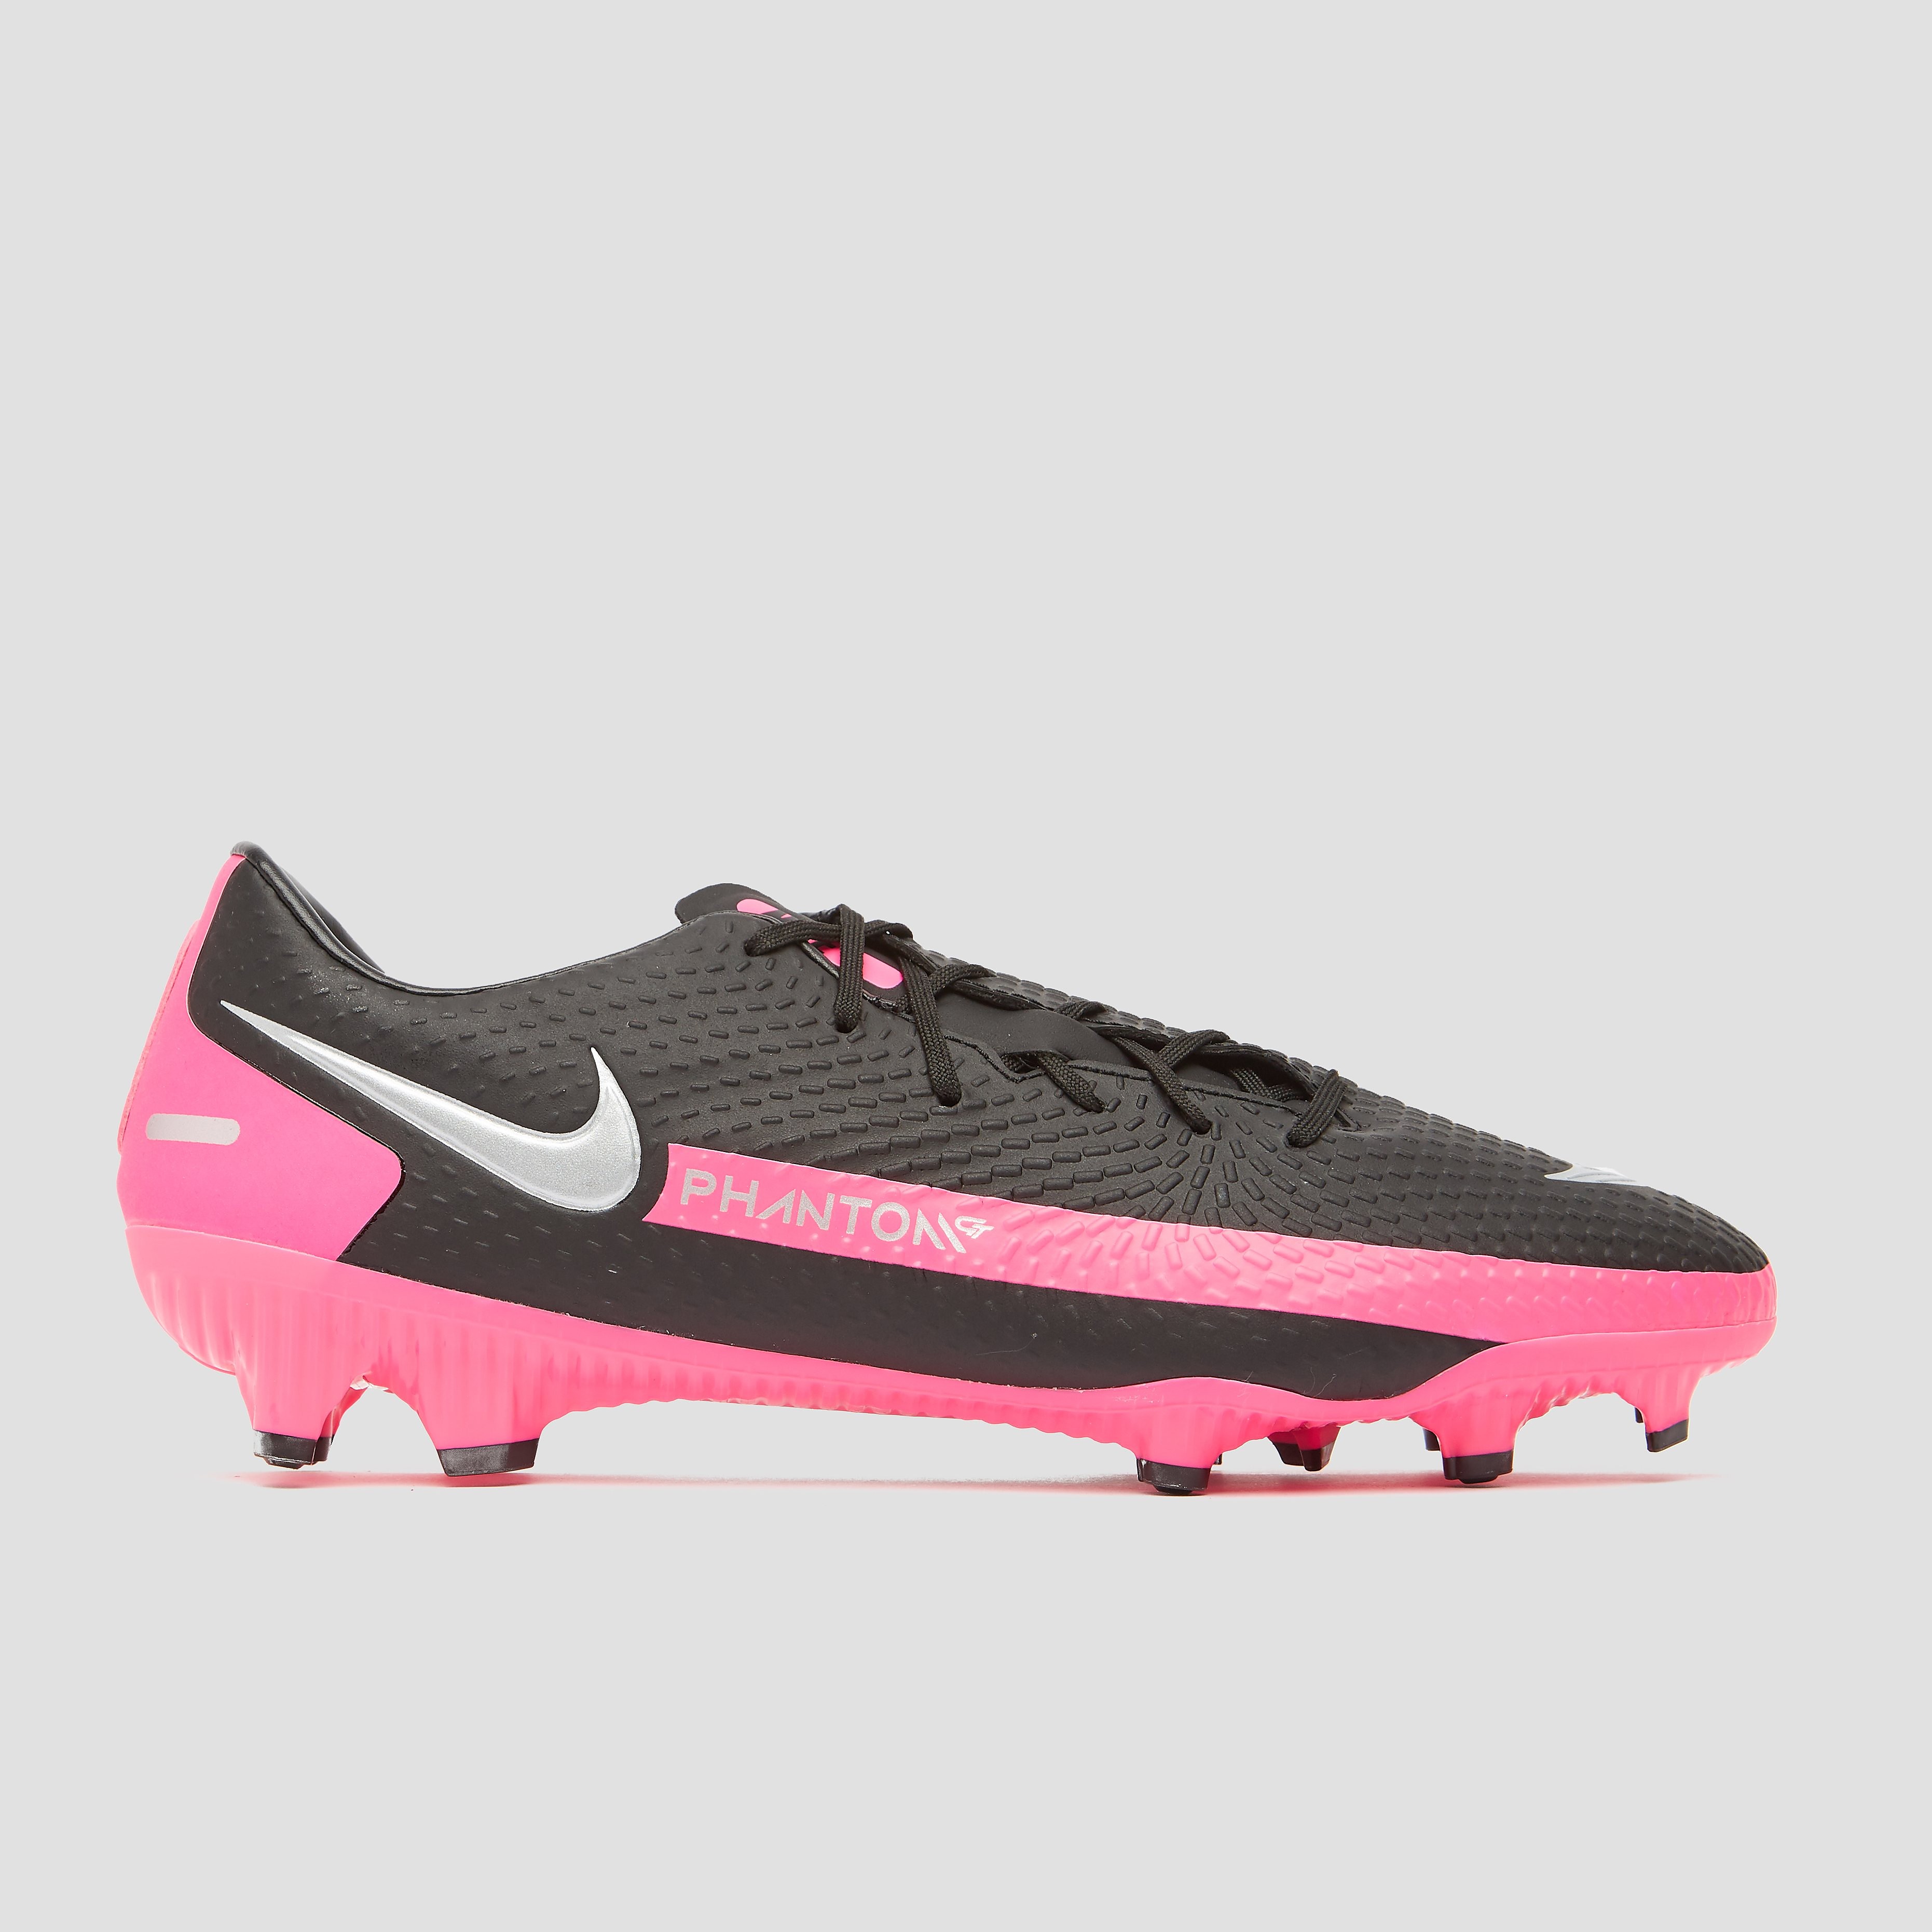 NIKE Phantom gt academy mg voetbalschoenen zwart/roze Dames